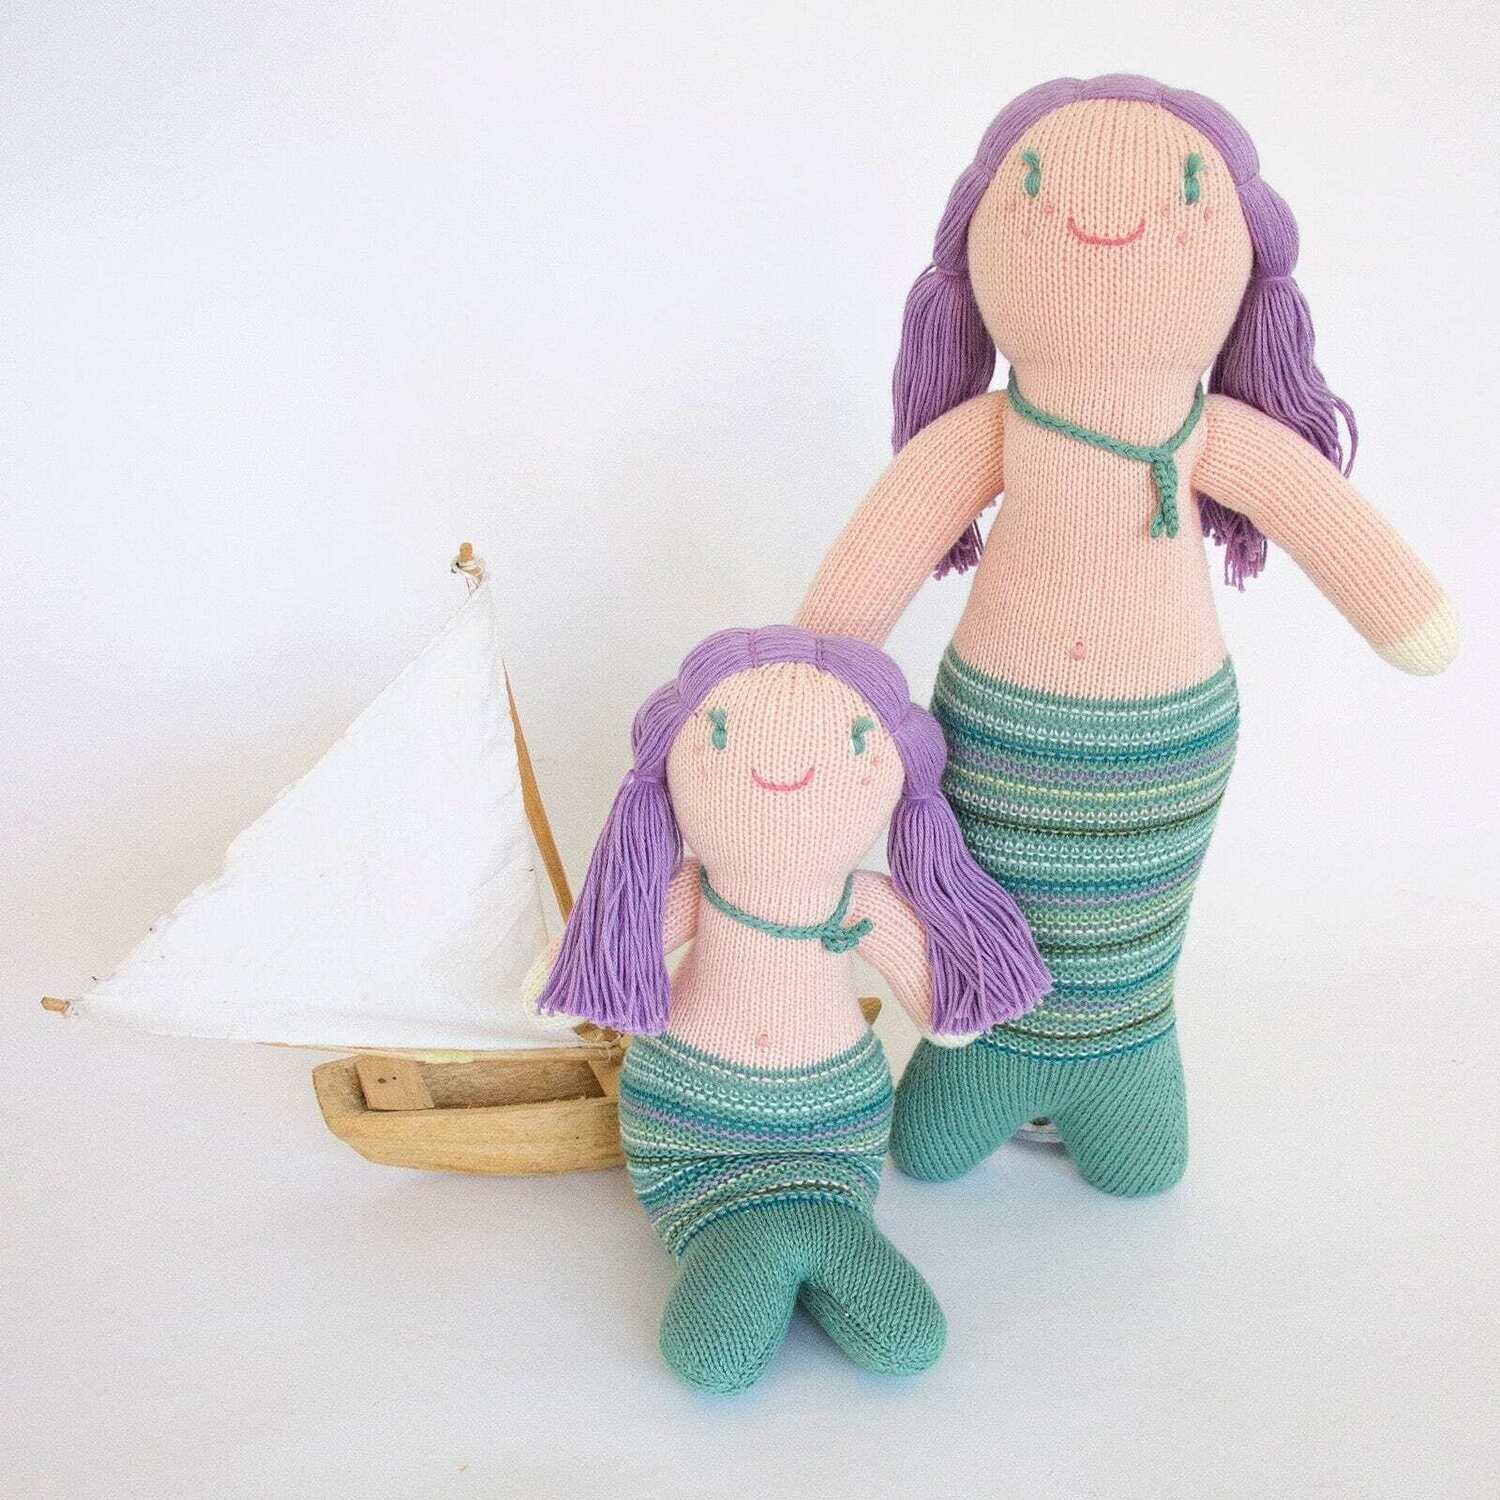 Blabla Kids Doll - Calypso the Mermaid, Size: Mini - 30cm